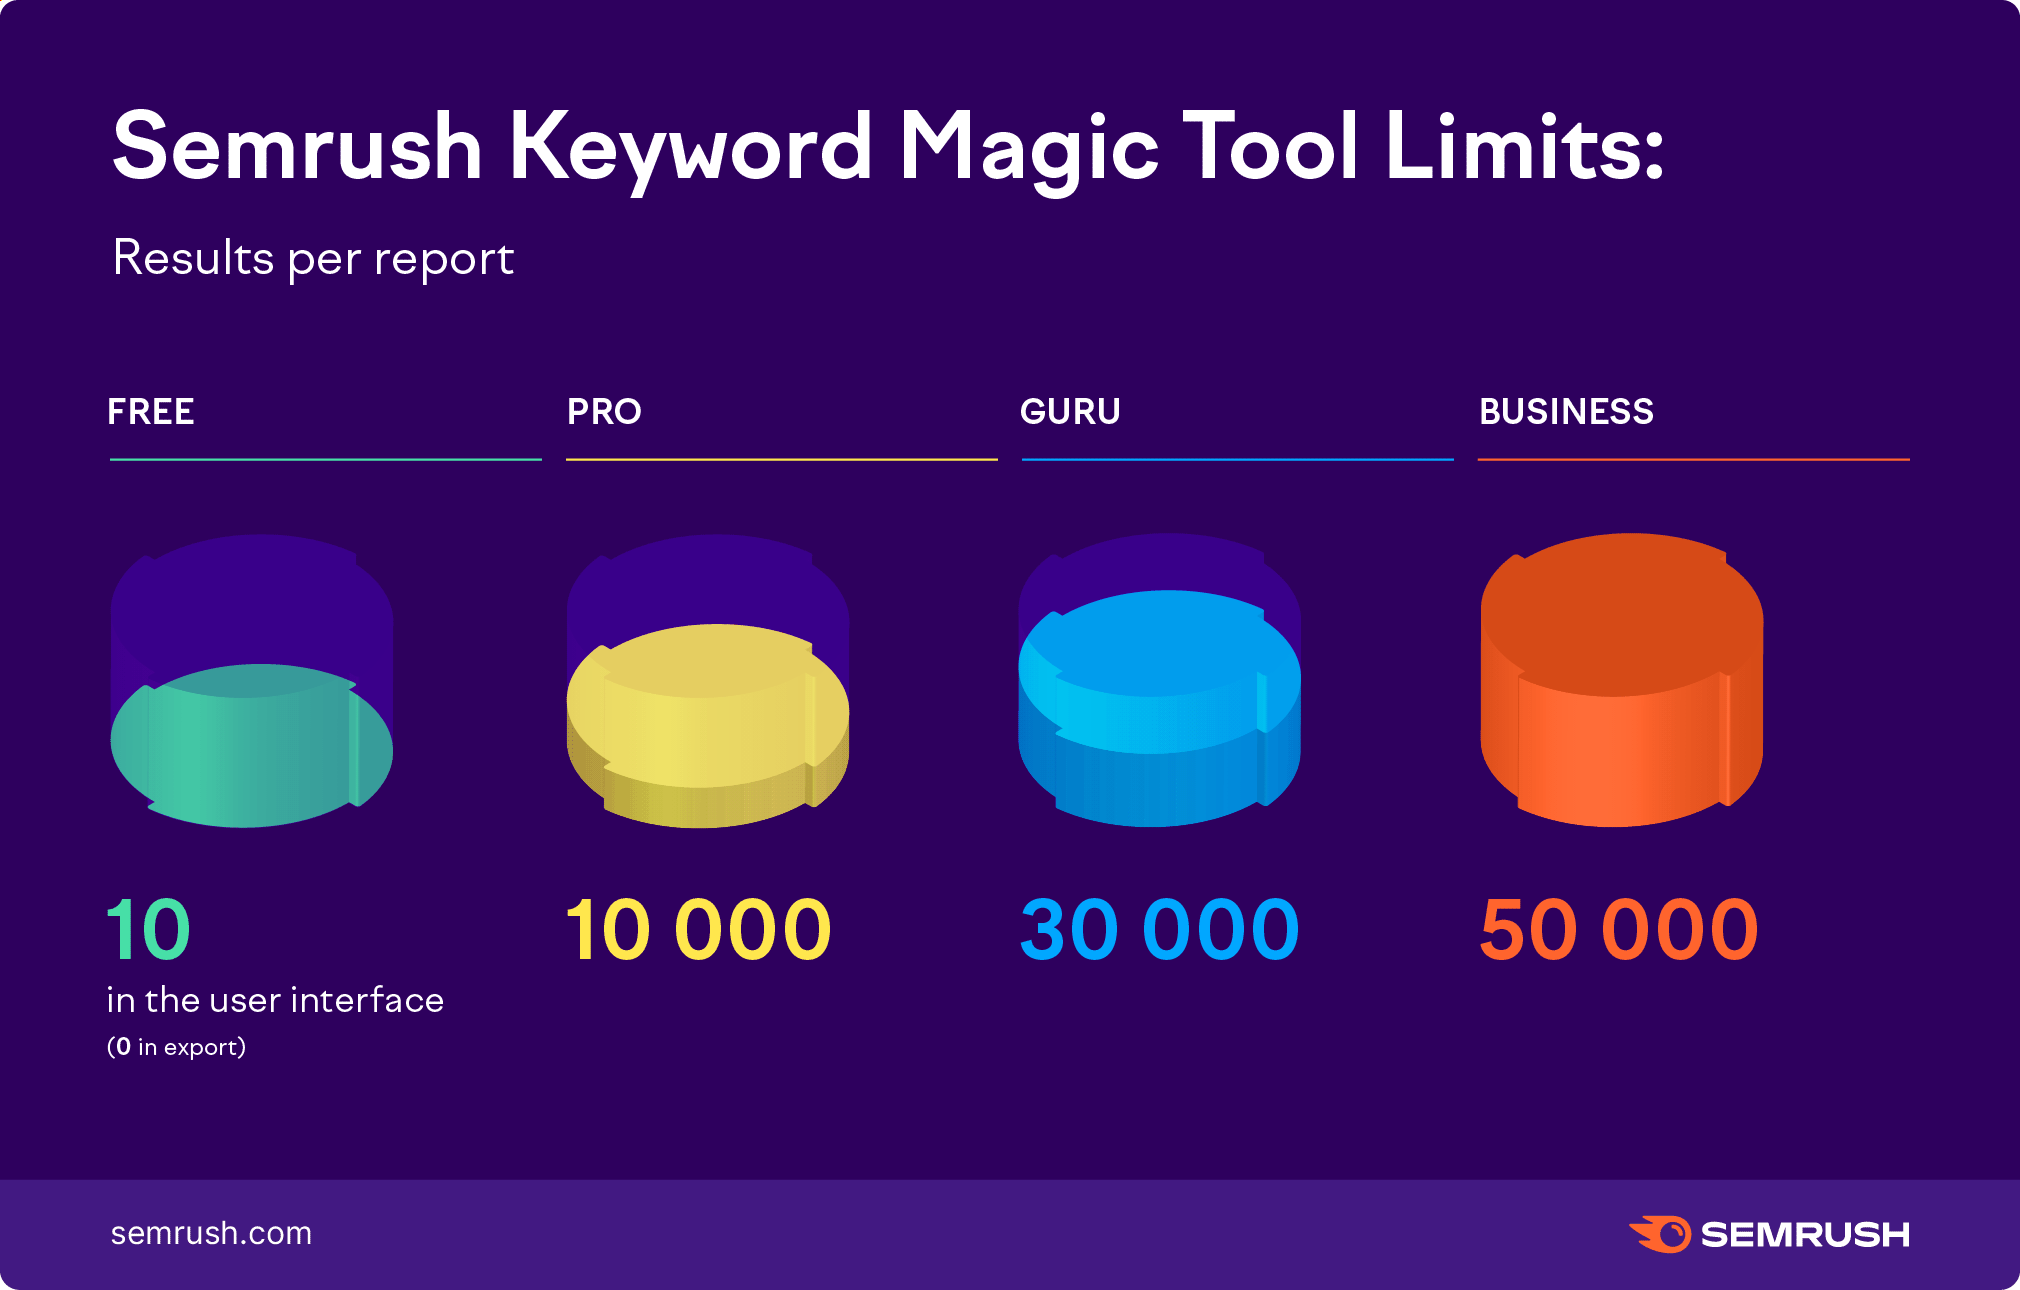 Semrush Keyword Magic Tool limits: Results per report. Free - 10 in the user interface, 0 in export, Pro - 10000, Guru - 30000, Business - 50000. 